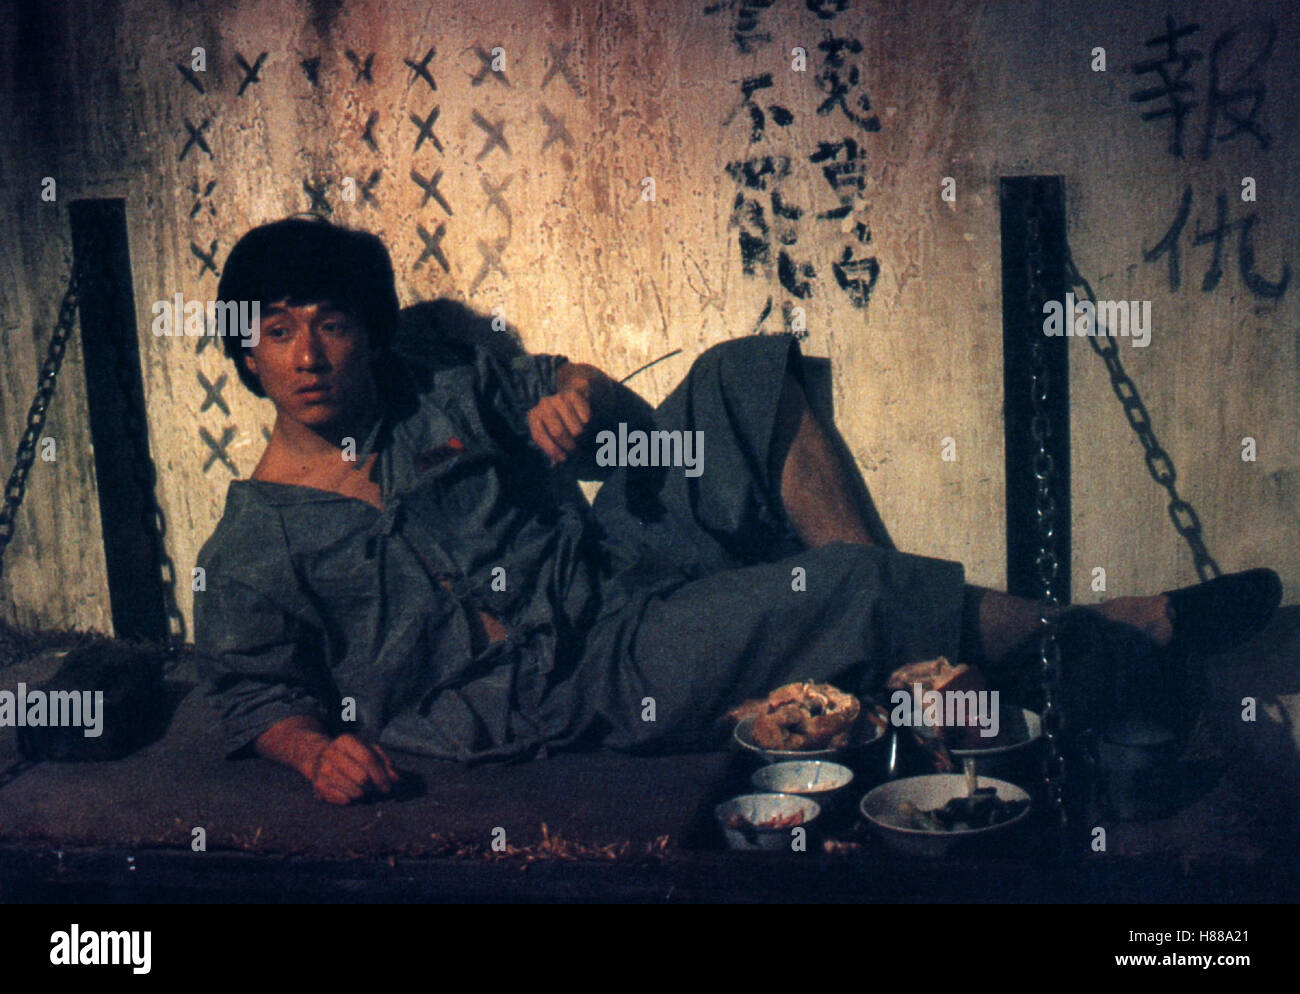 Projekt B, (A CHI-HUA II) HK 1987, Regie: Jackie Chan, Jackie Chan, Stichwort: Pritsche, Gefängnis, Zelle, Häftling Foto Stock